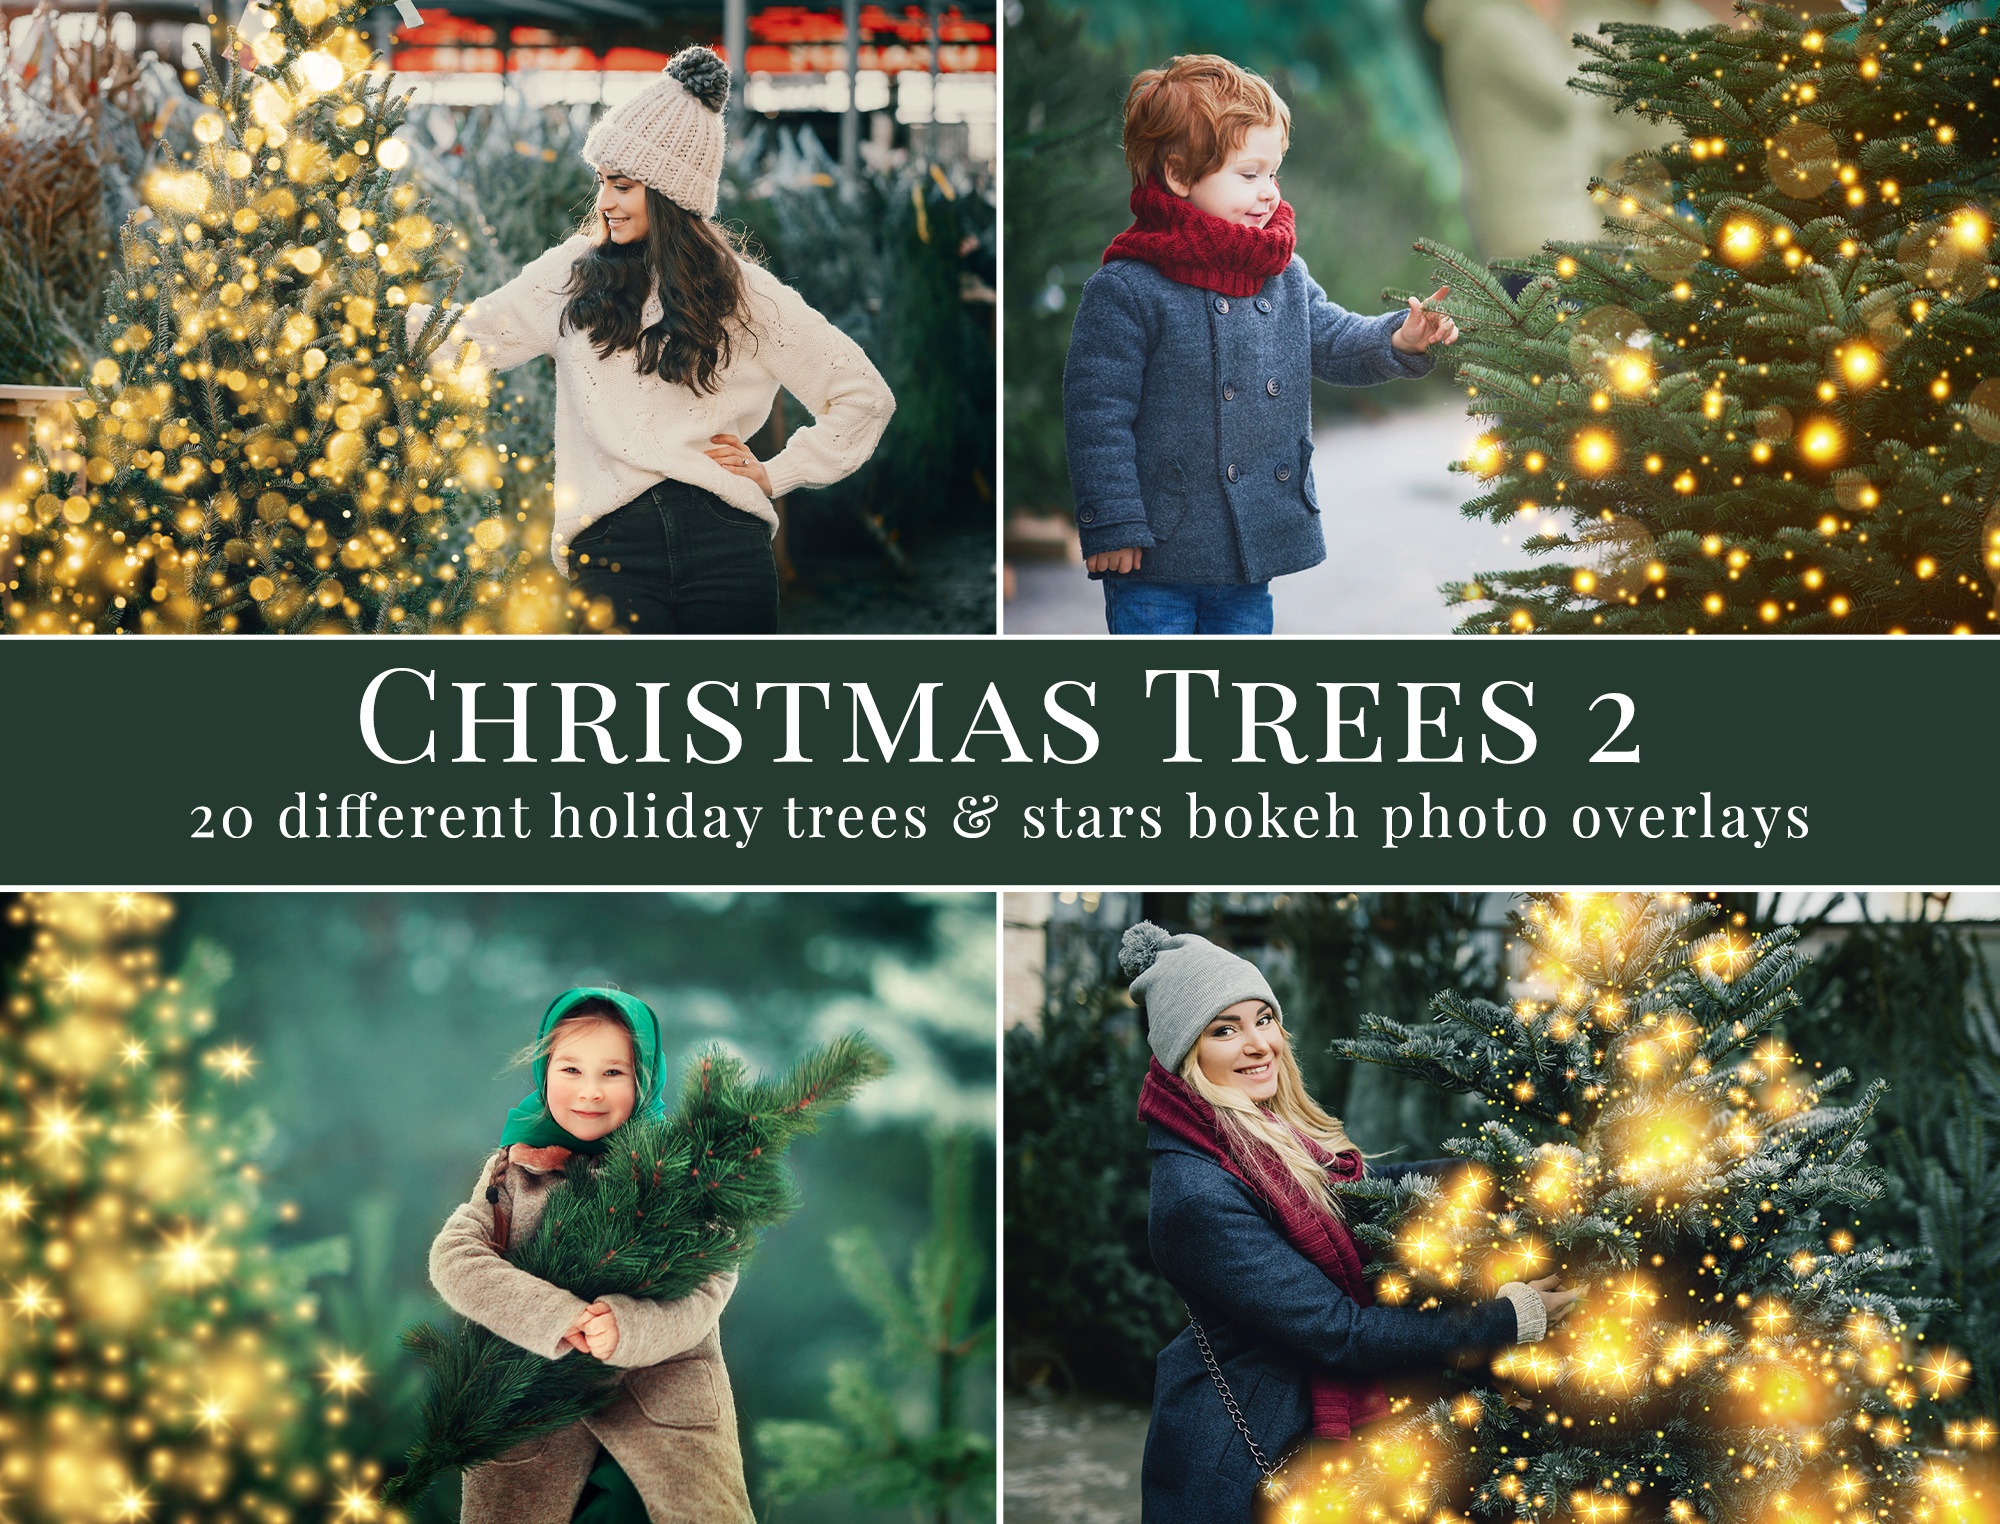 Christmas Trees 2 photo overlays